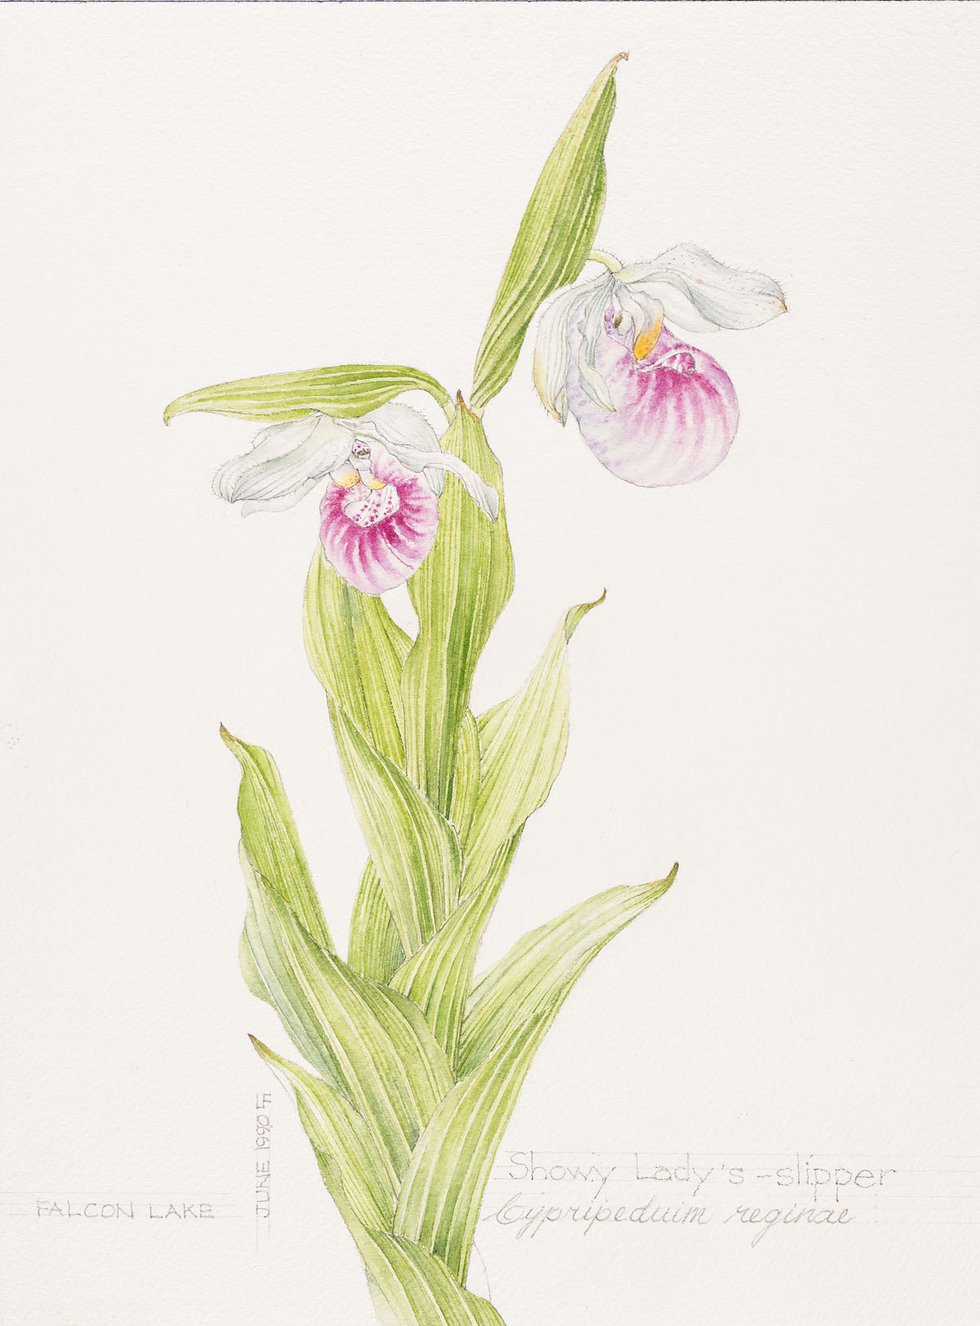 Linda Fairfield Stechesen, botanical drawings (showy lady's slipper), 1977-2007